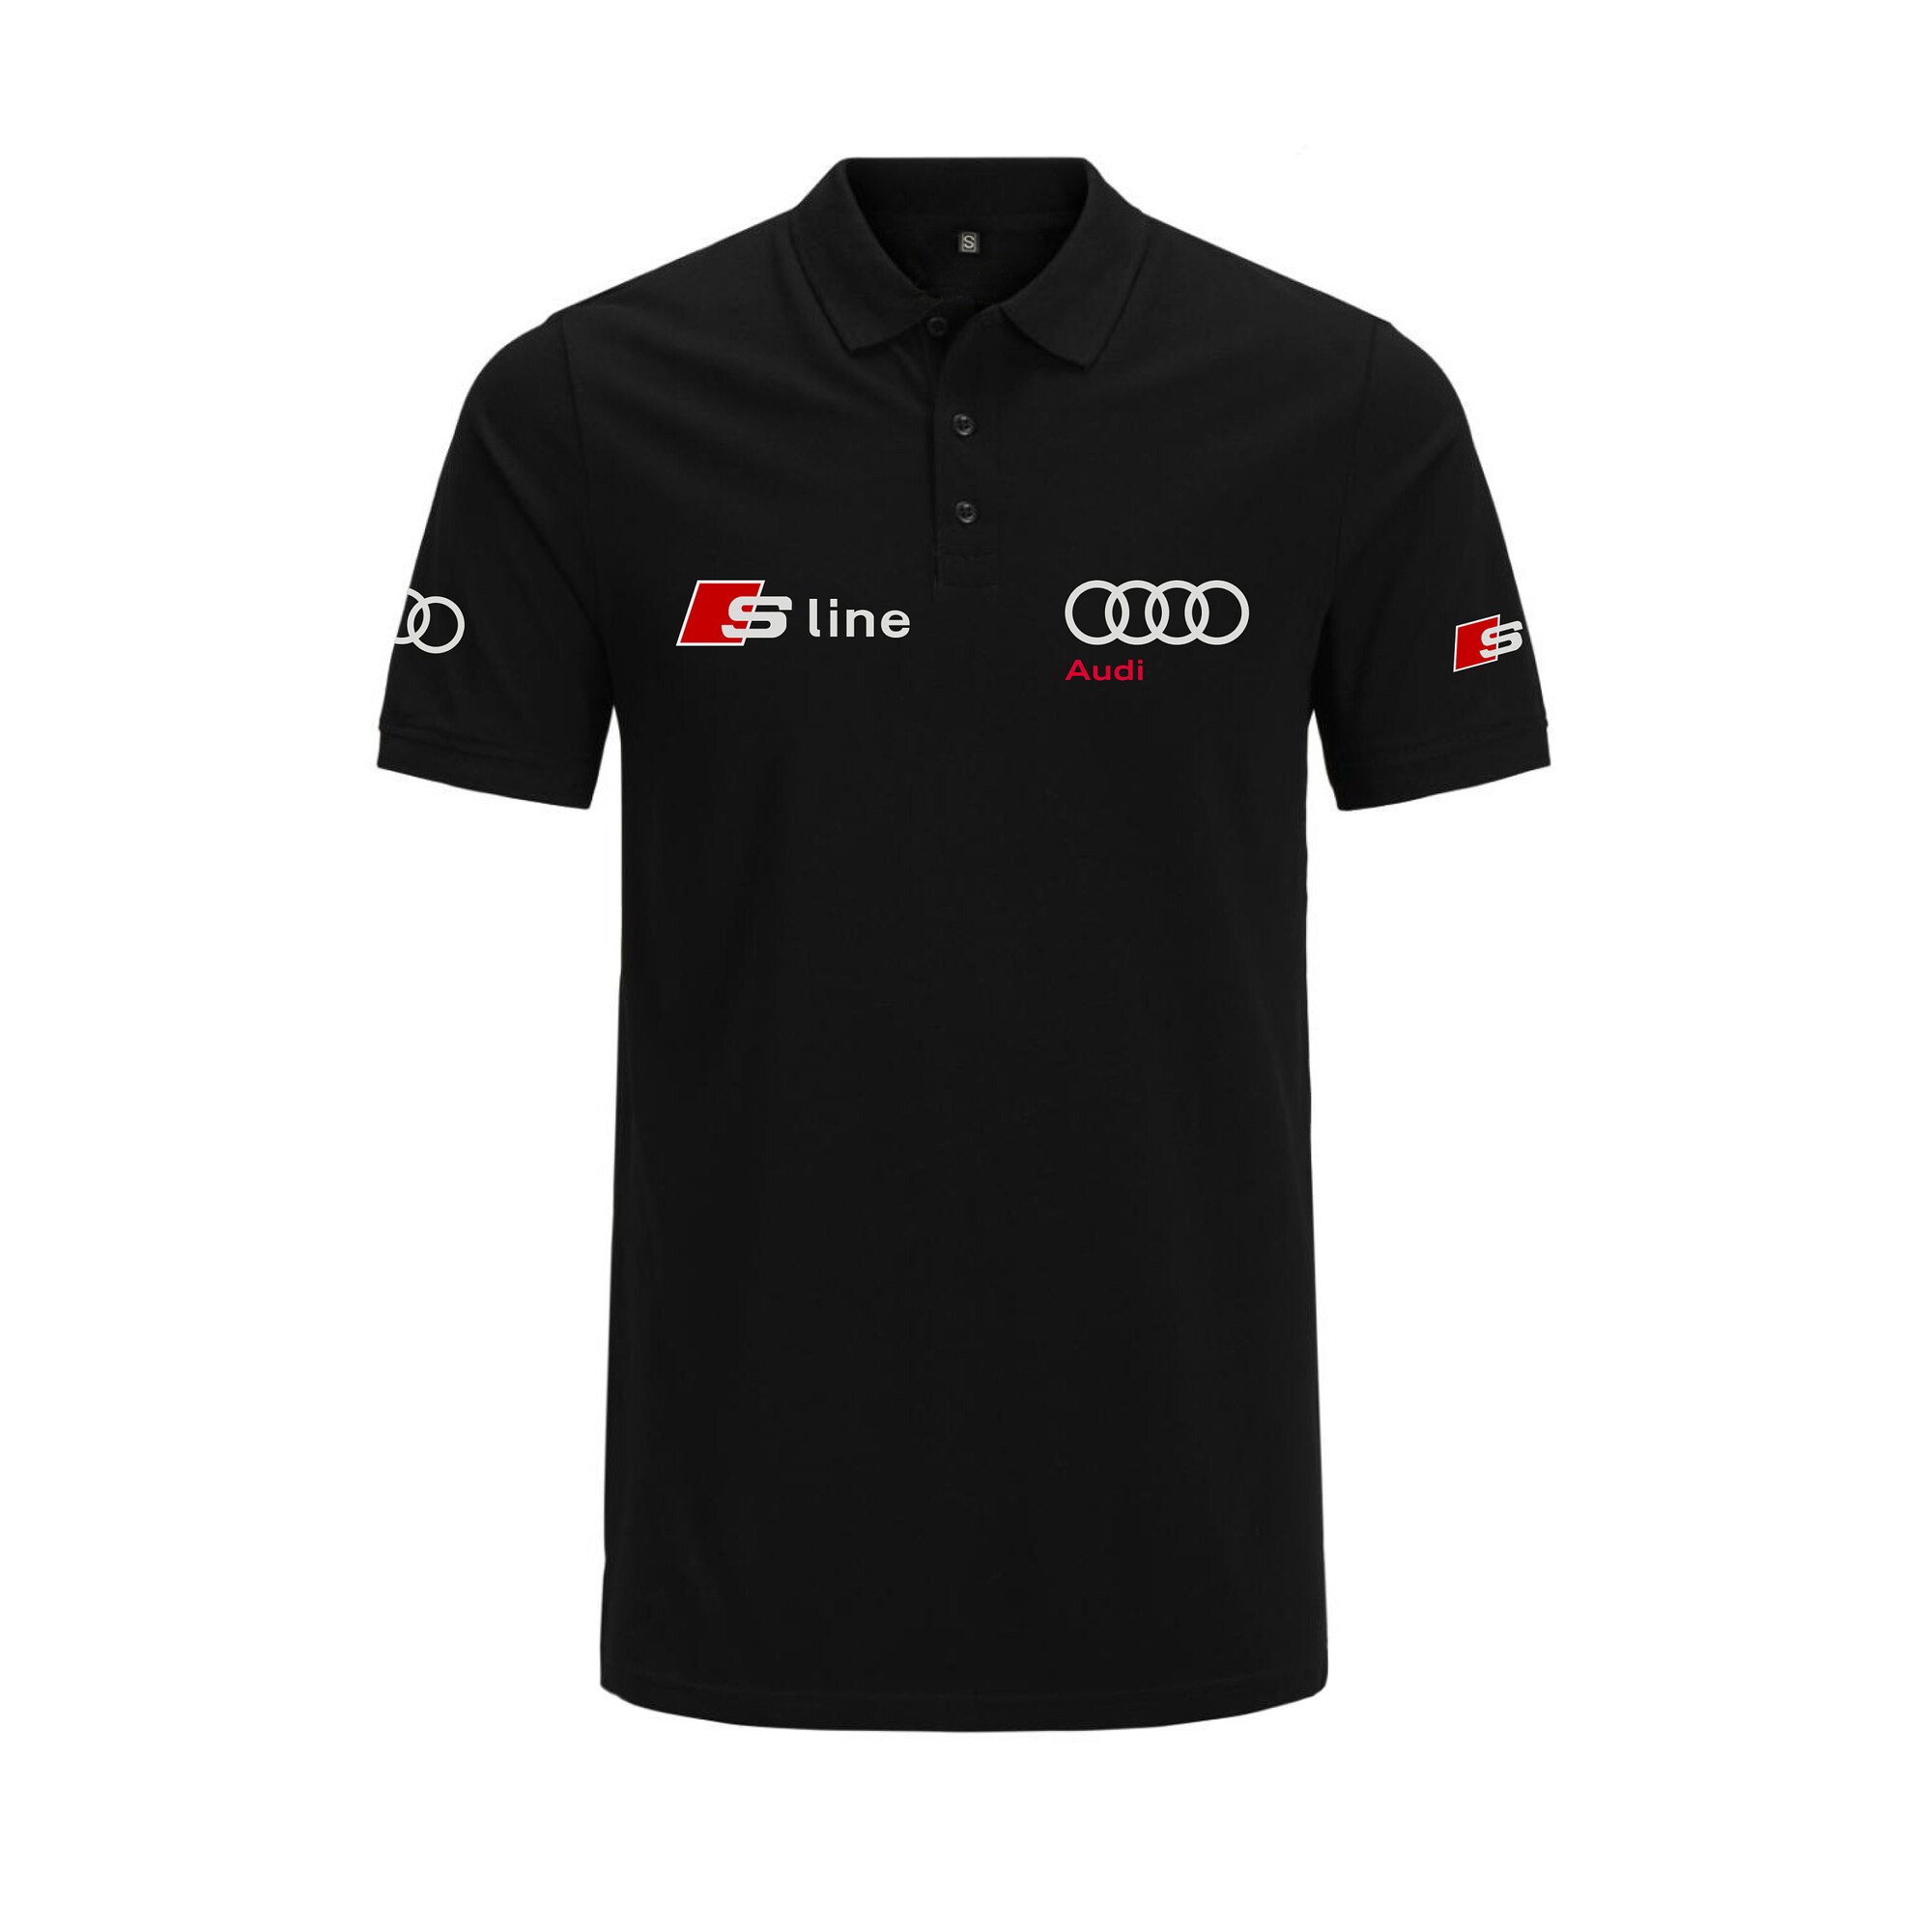 Black Audi SLine Polo shirt / Audi S Line Polo Tshirt